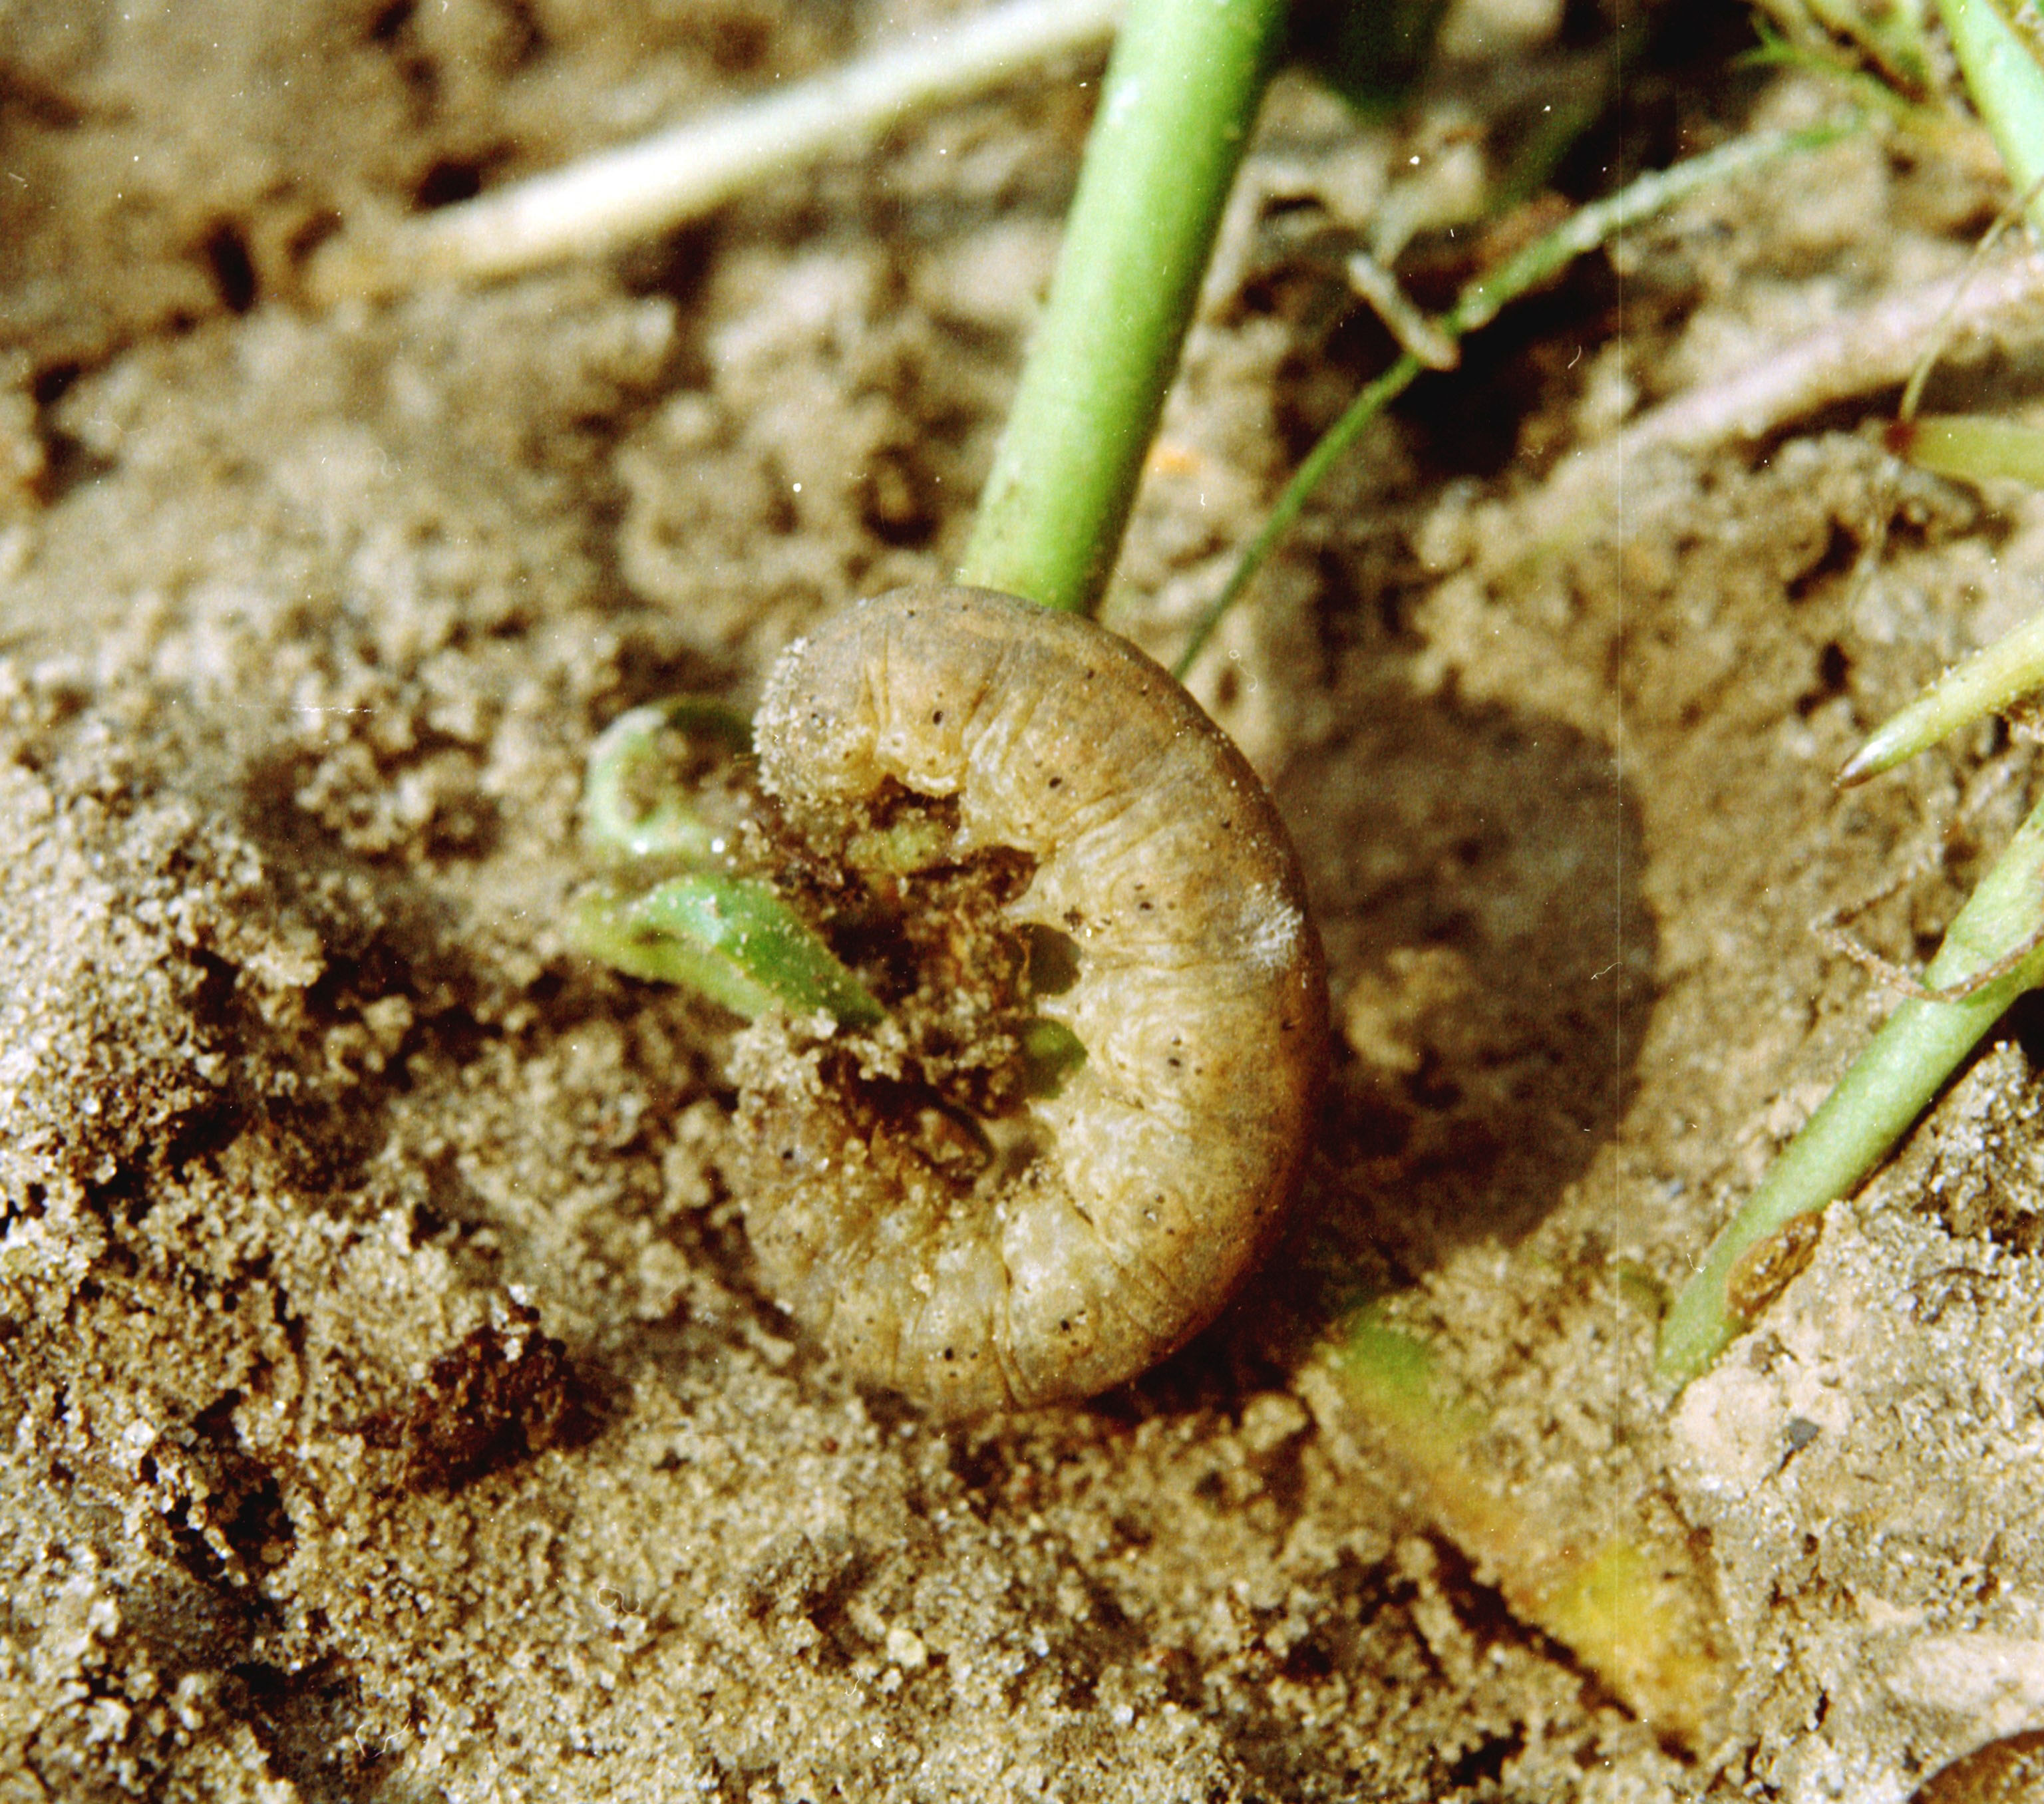 Closeup of a tan cutworm feeding on a green plant stem at the soil line.